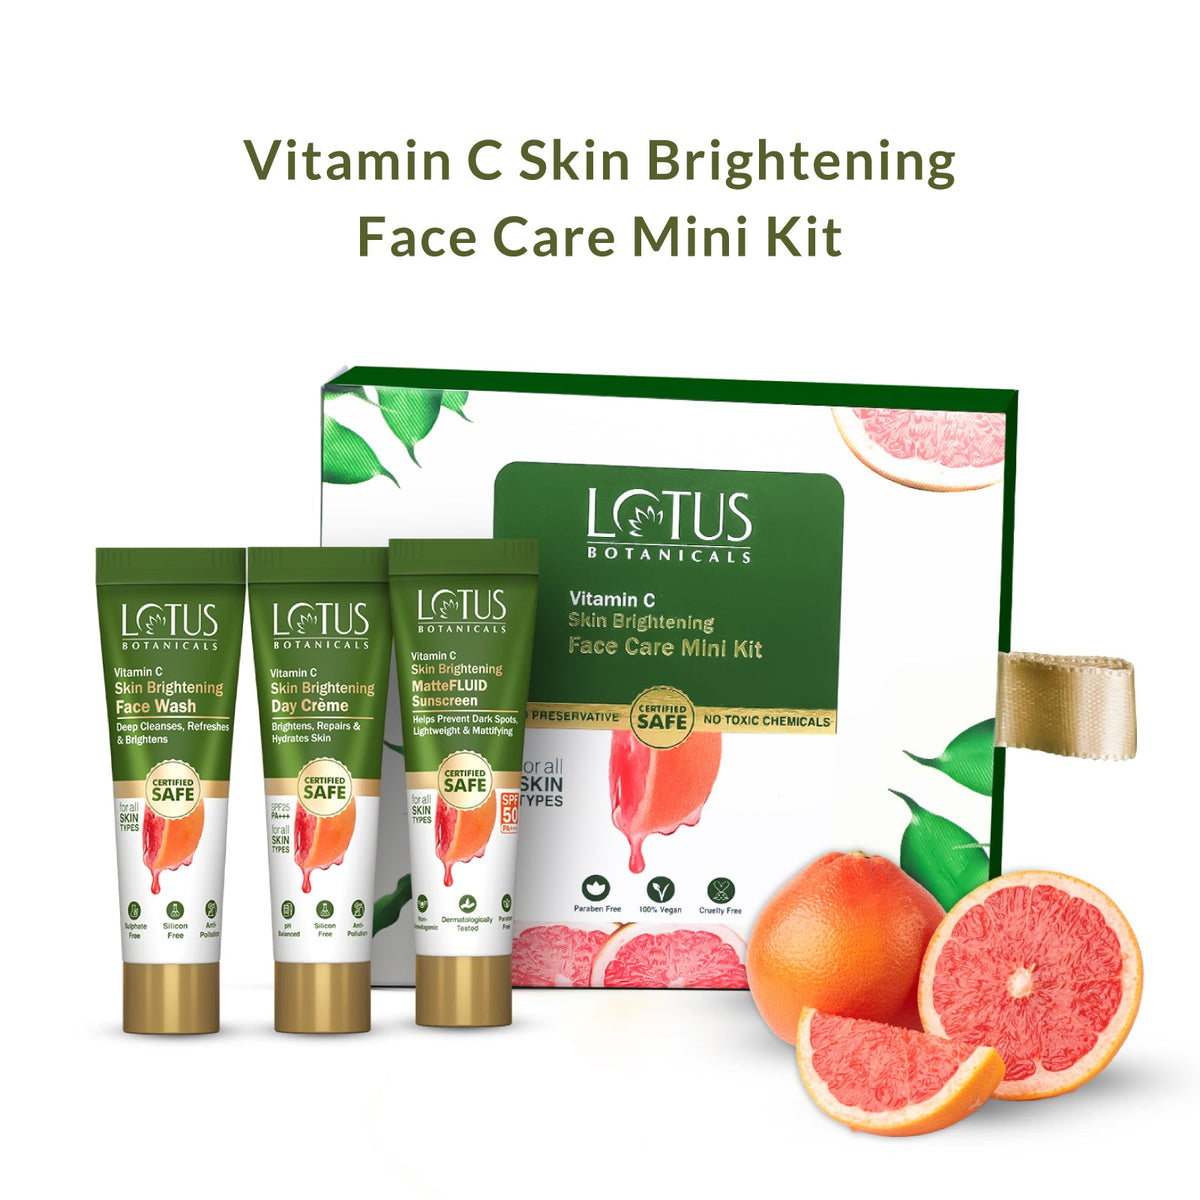 Vitamin C Skin Brightening Face Care Mini Kit